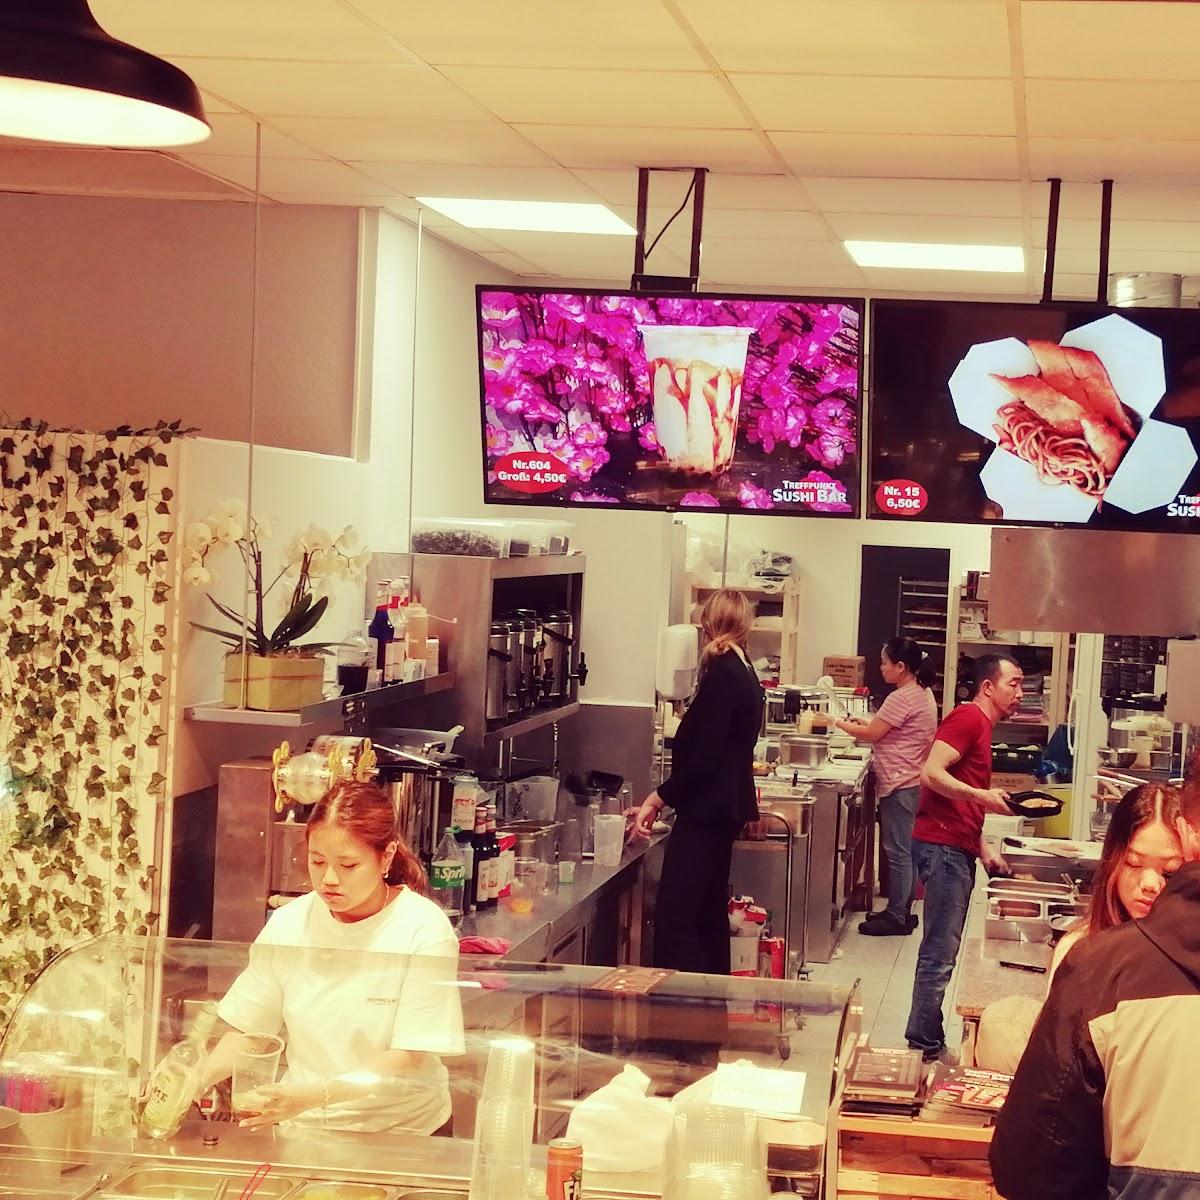 Restaurant "Treffpunkt Sushi Bar" in Moormerland